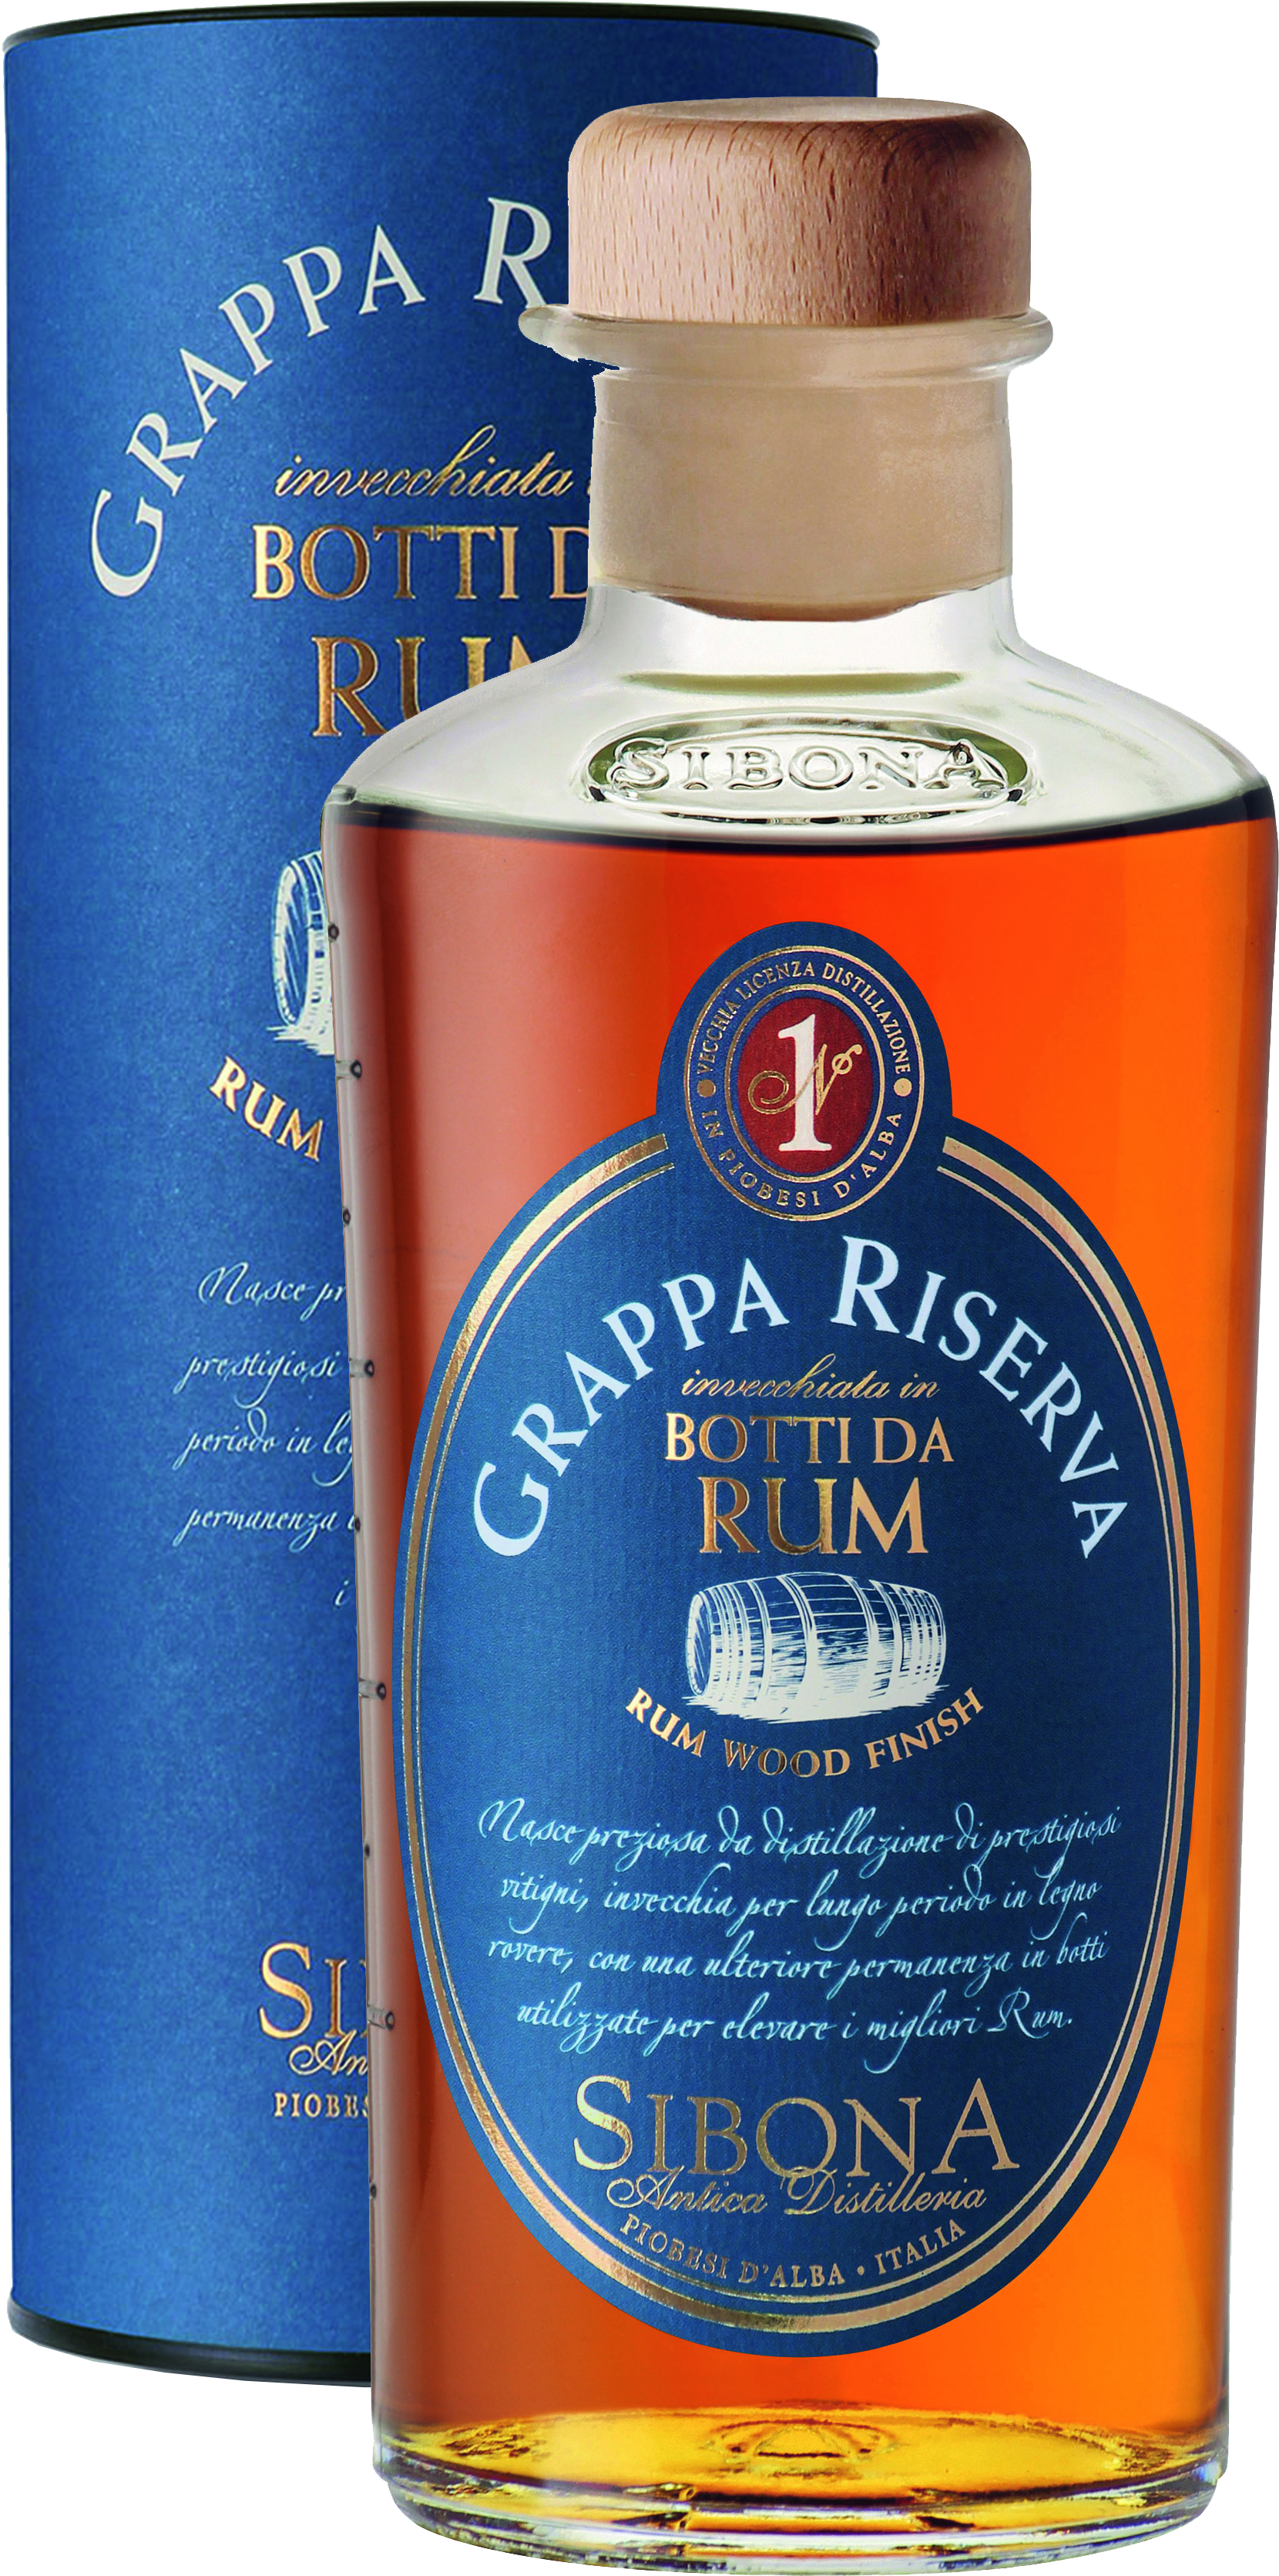 Sibona Grappa Botti of | Riserva Spirits Club da Rum